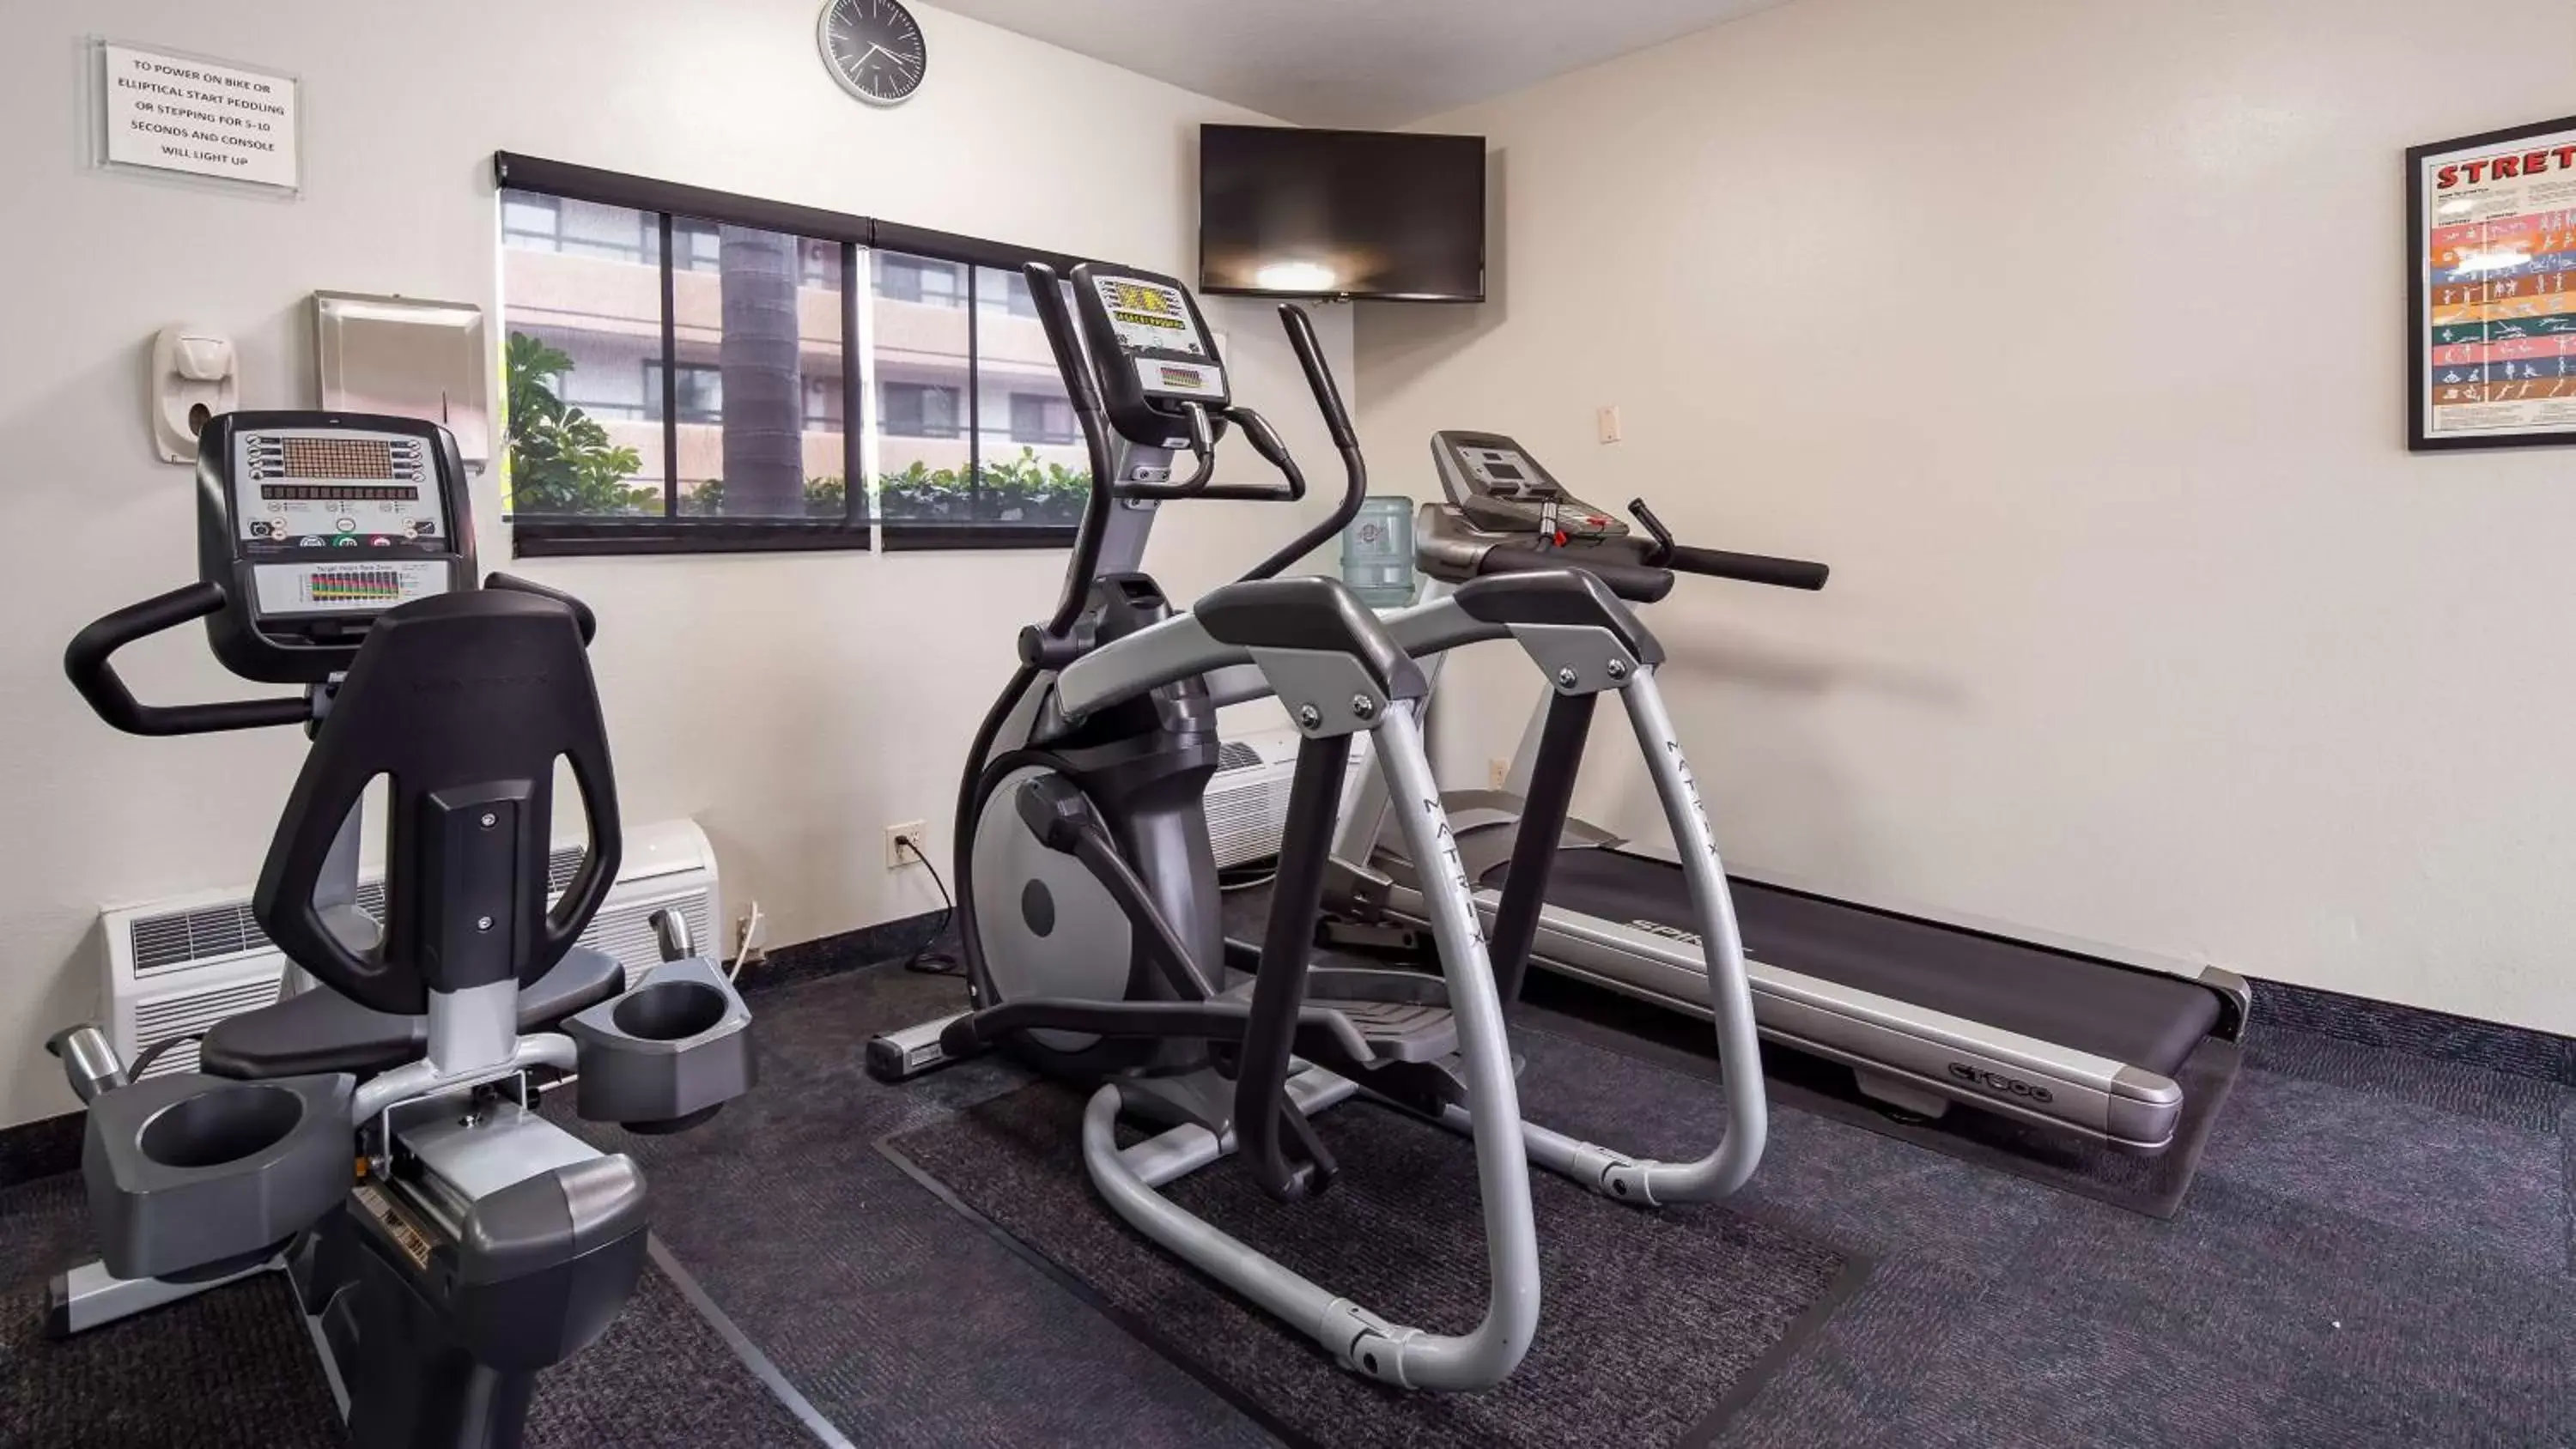 Fitness centre/facilities, Fitness Center/Facilities in Best Western Plus Redondo Beach Inn